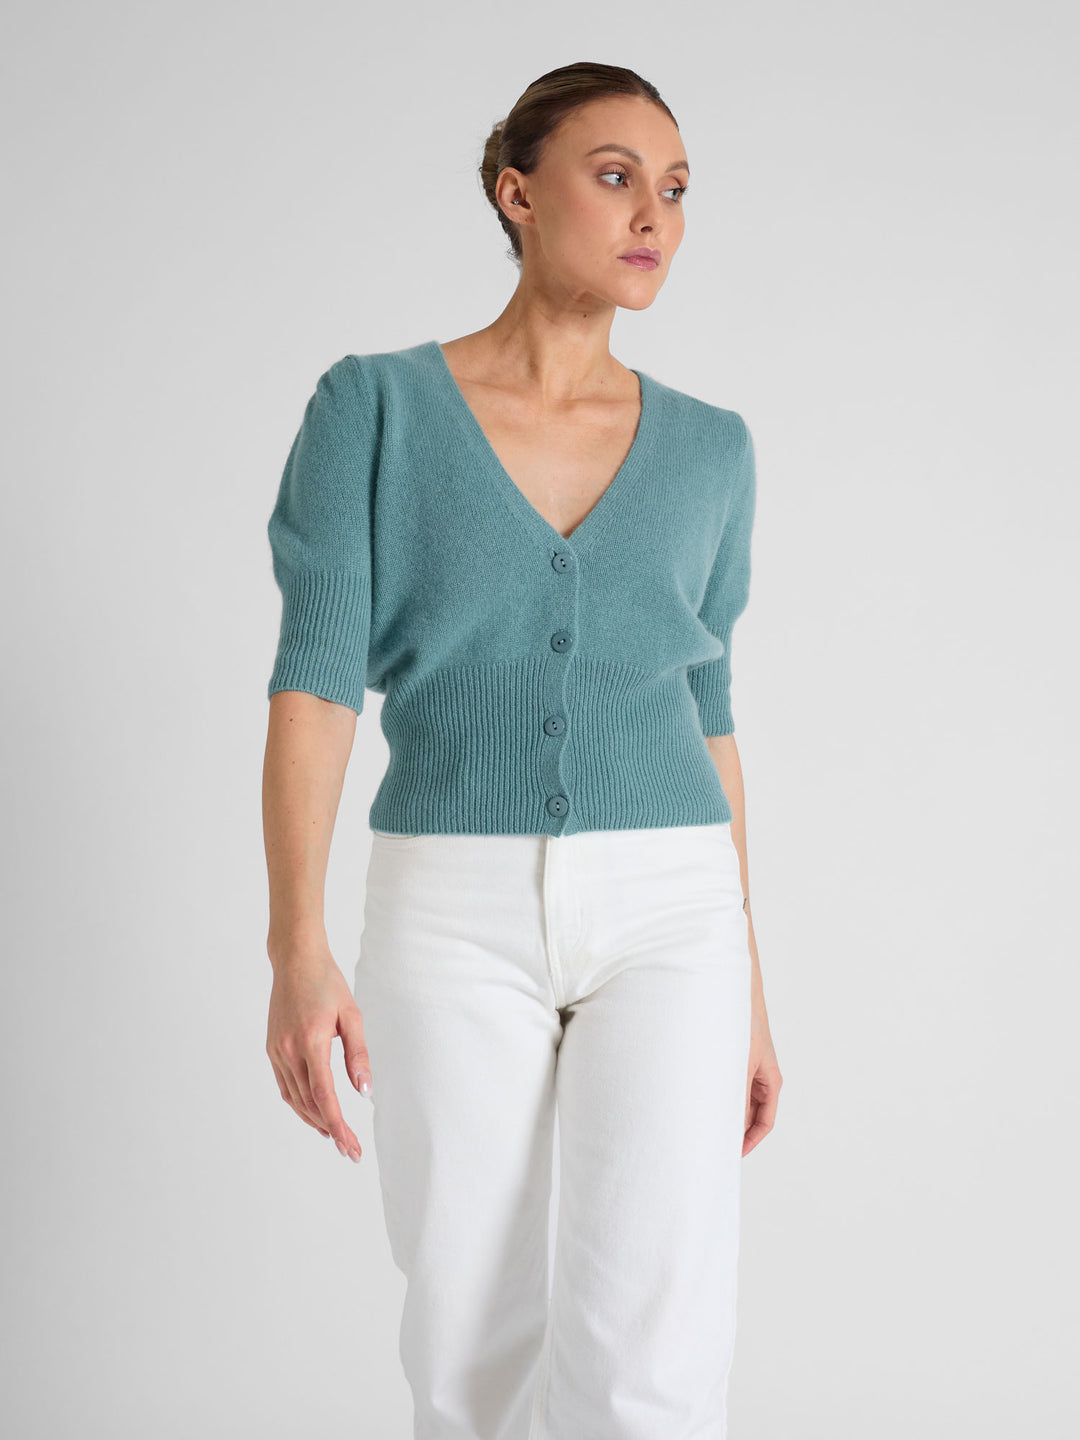 Cashmere cardigan "Grace" in 100% pure cashmere. Scandinavian design by Kashmina. Color: Arctic.